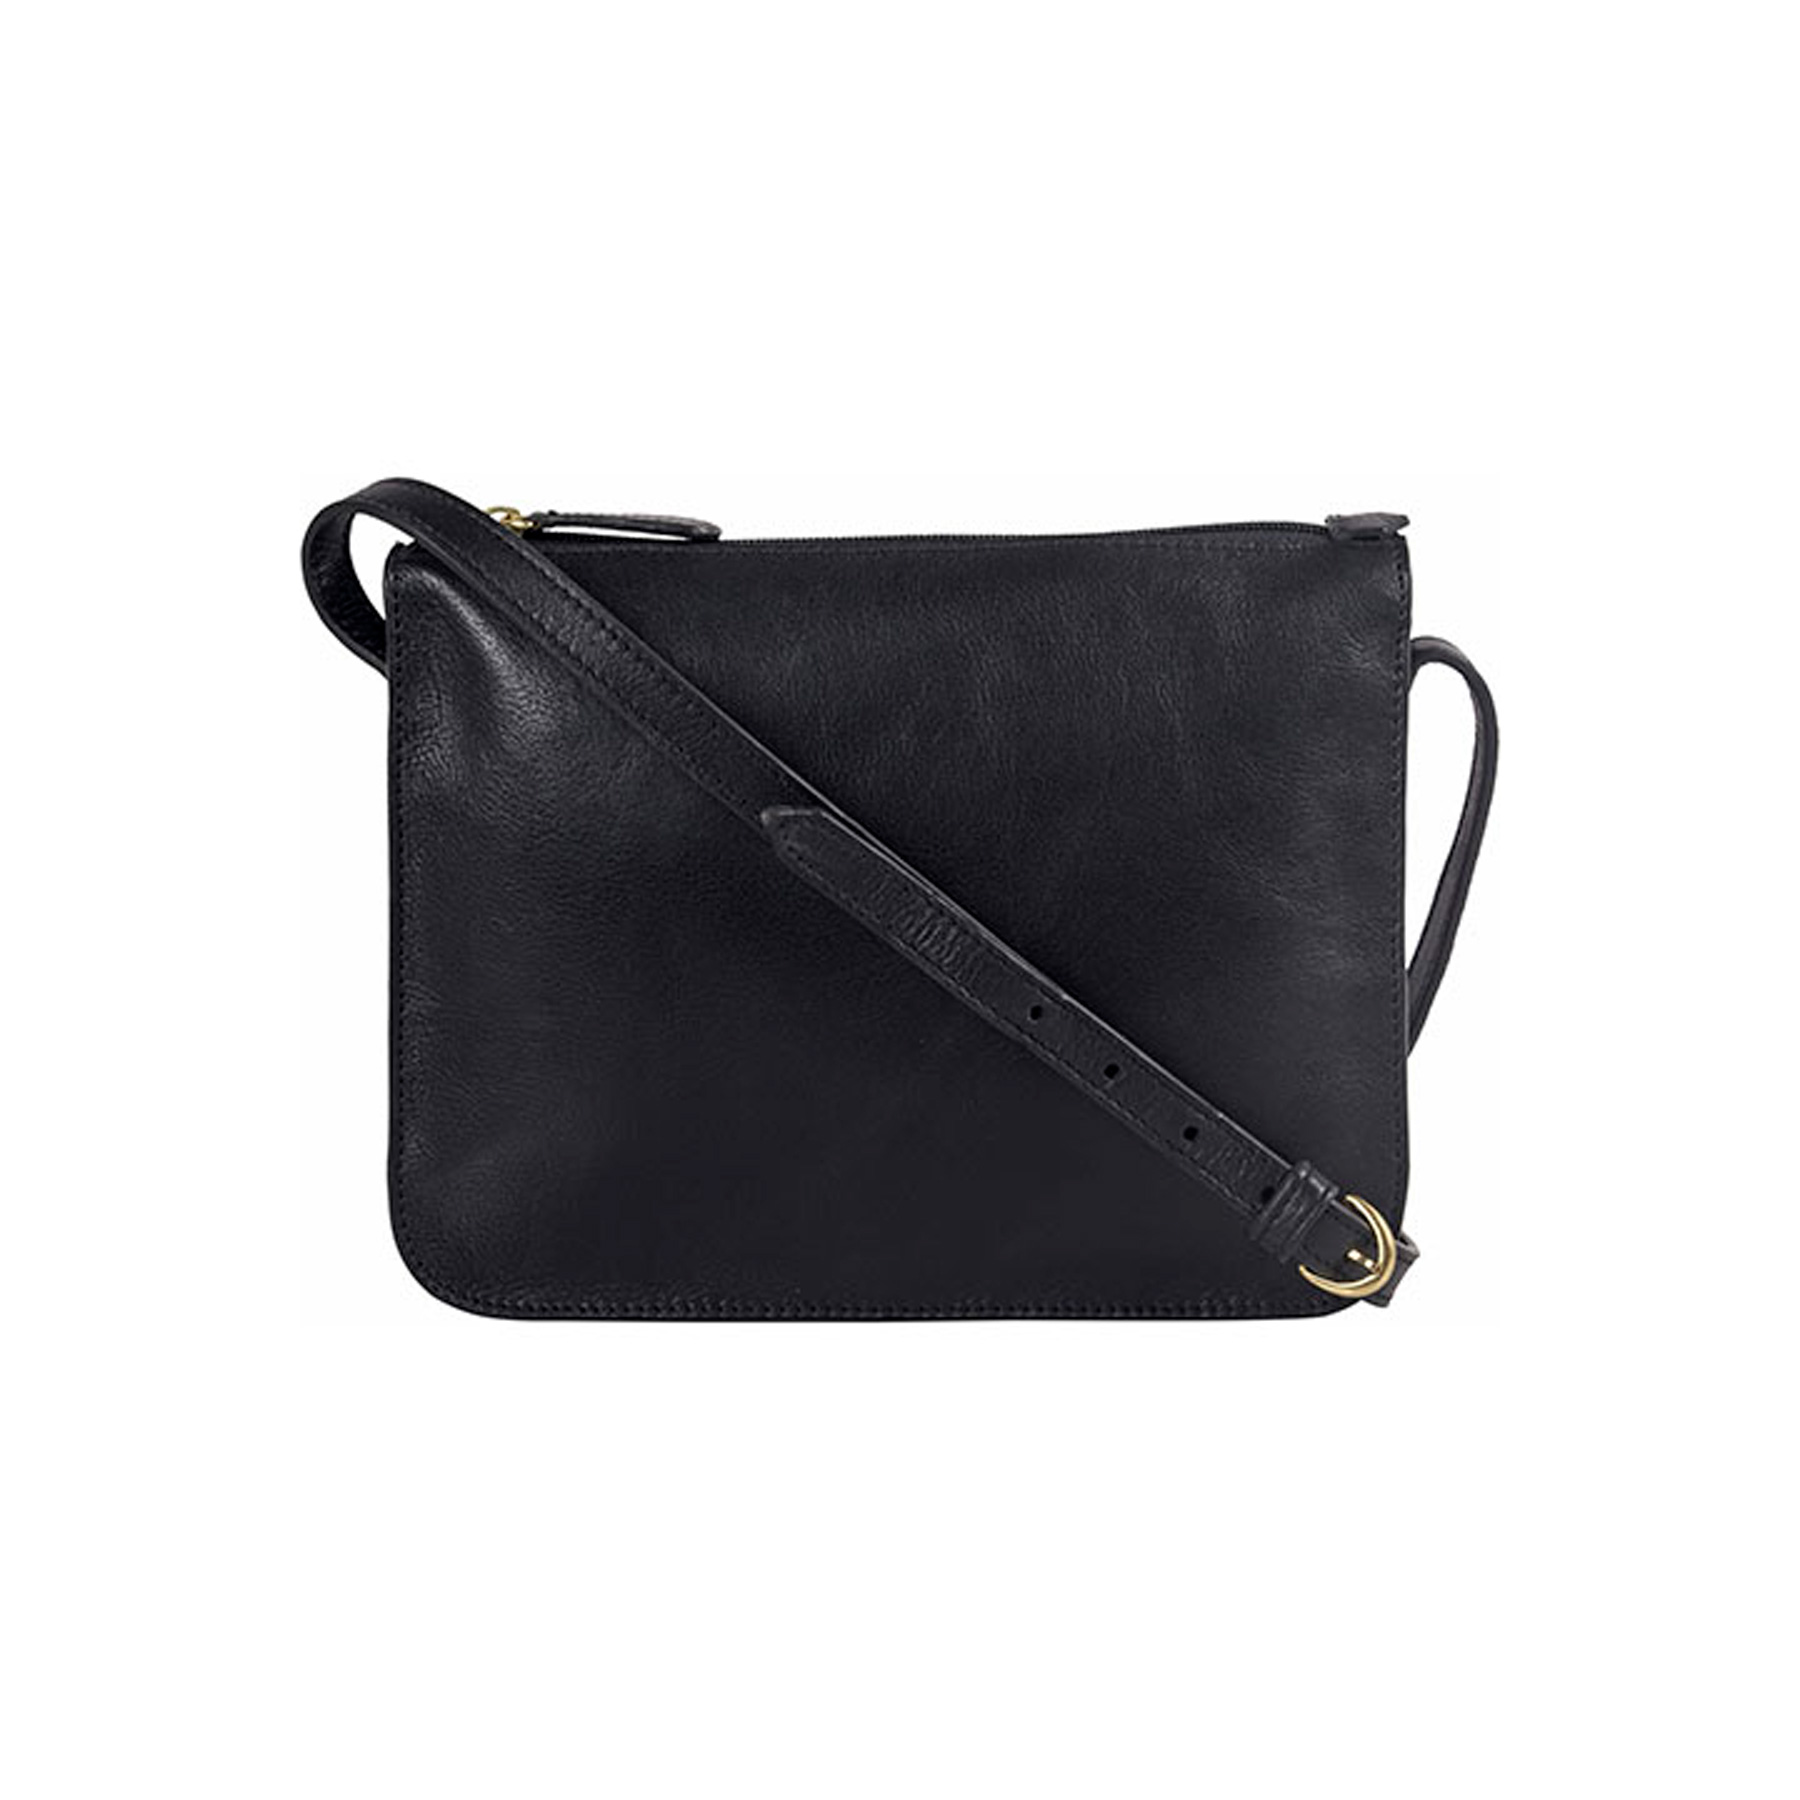 Pungo Ridge - Scully Leather Crossbody Handbag - Black, Scully Handbags ...